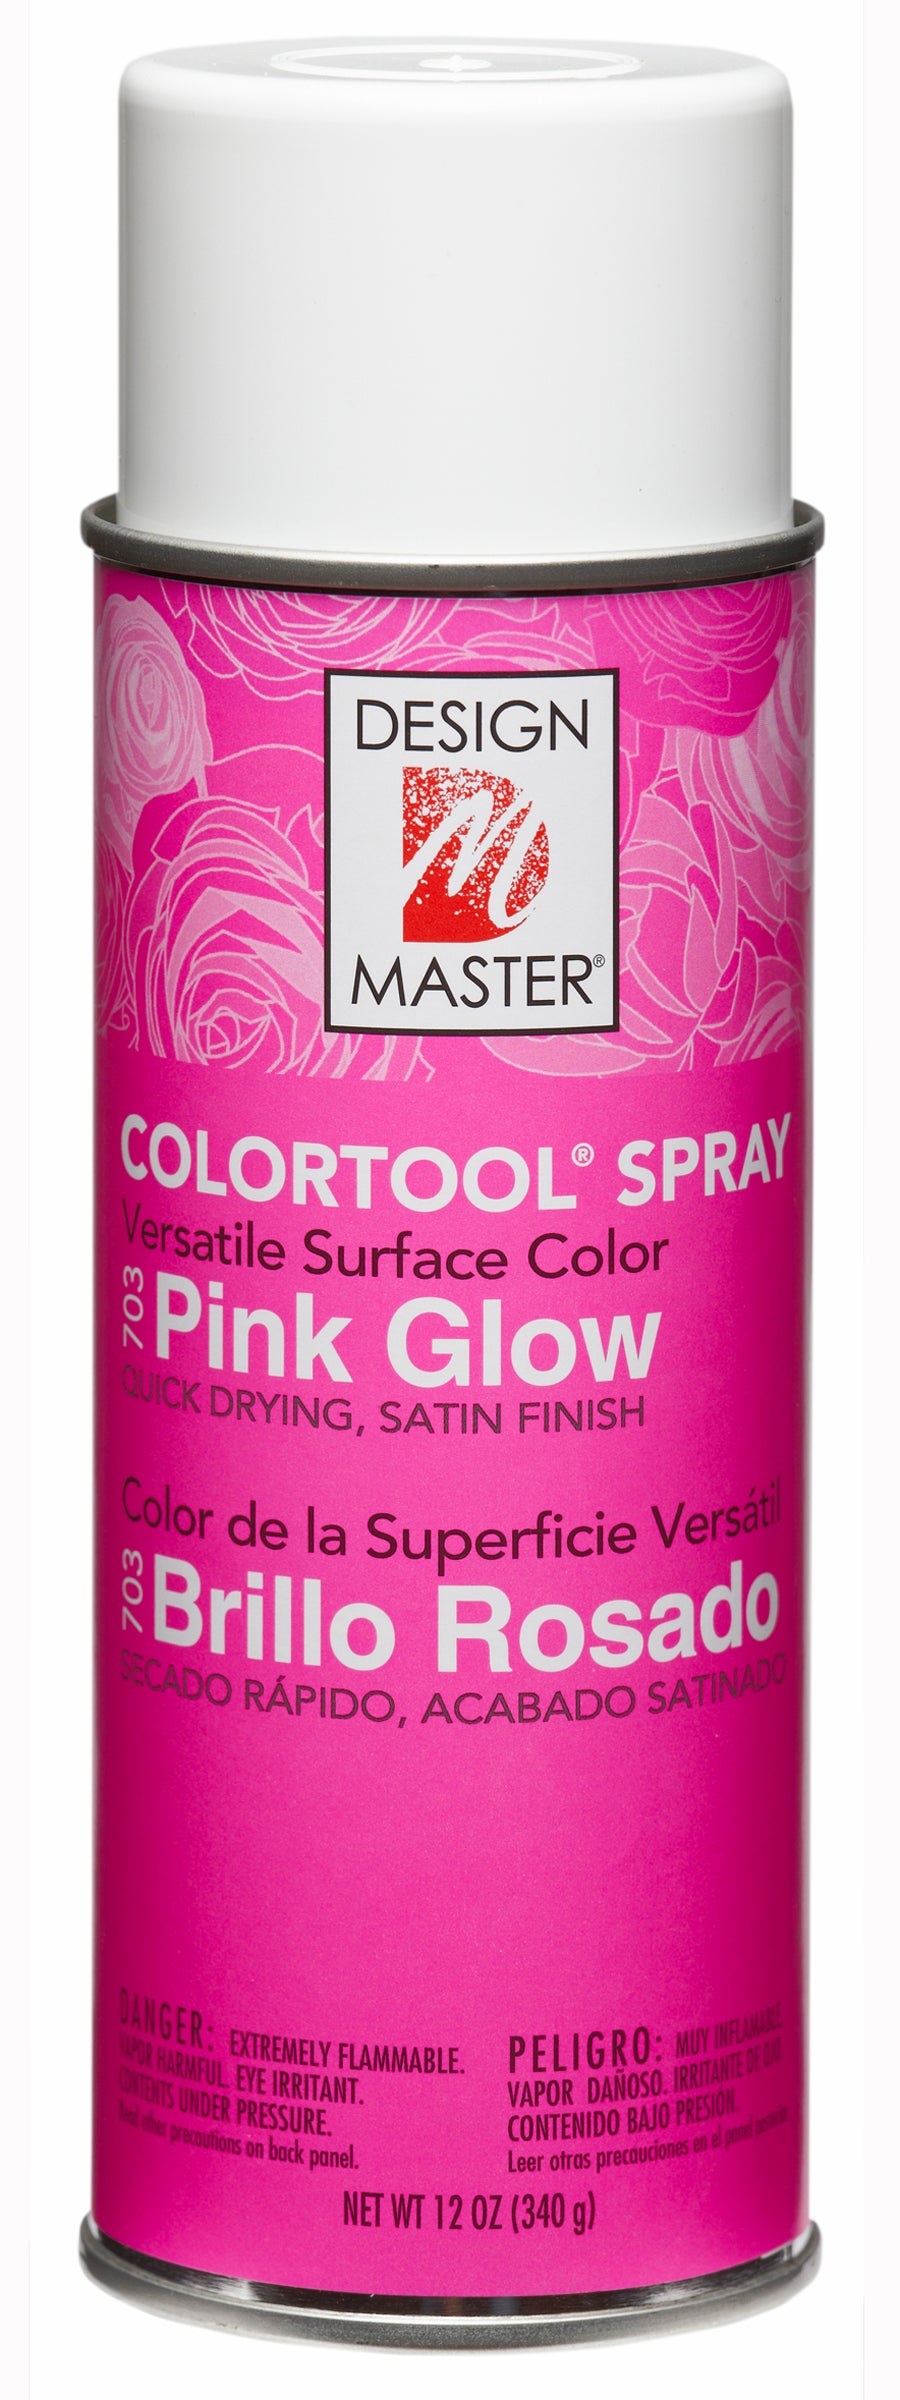 Design Master Colortool Spray-Pink Glow